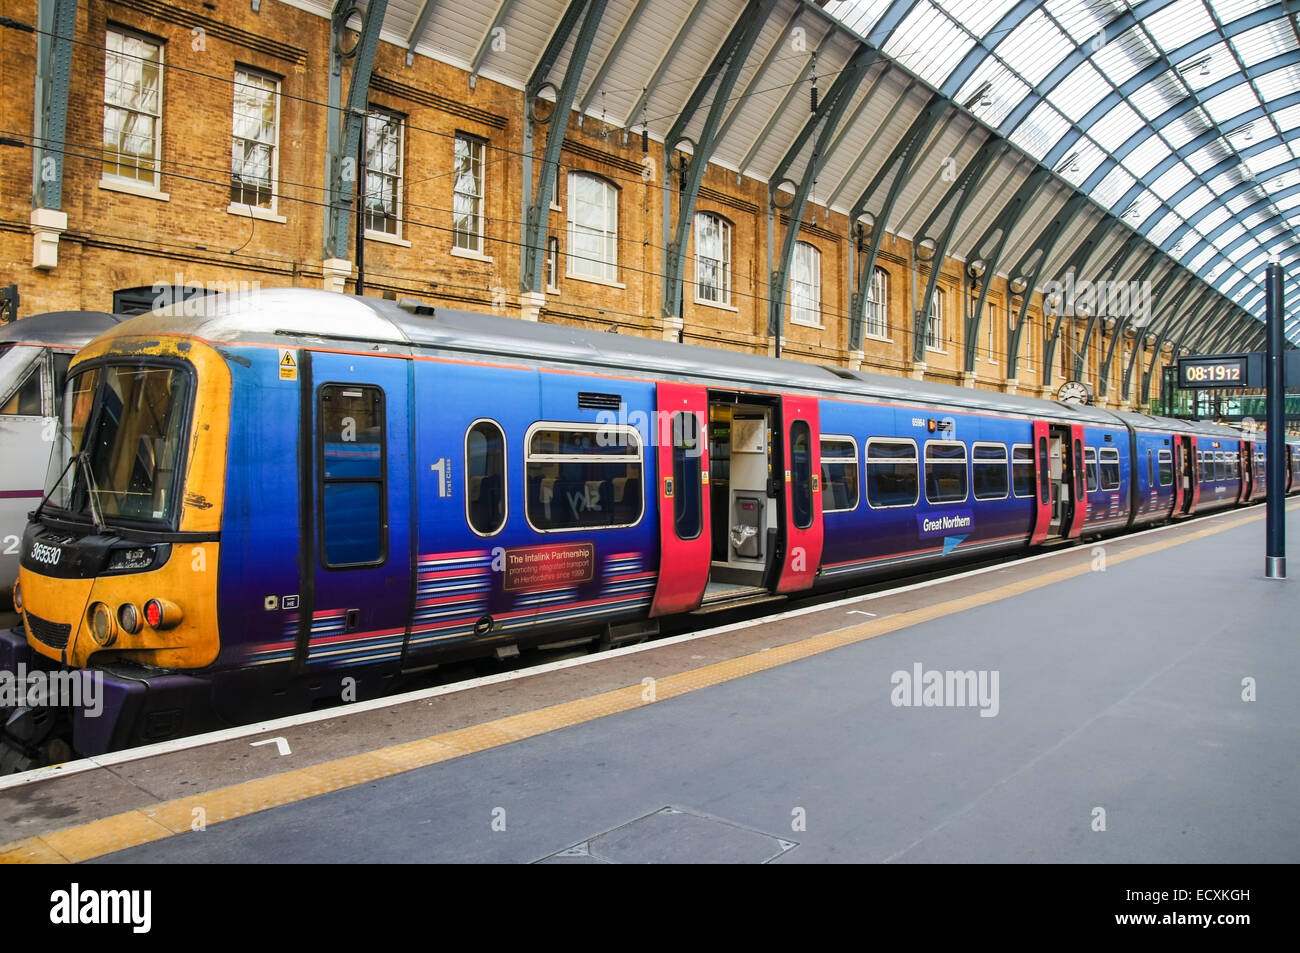 Great Northern train on the platform at Kings Cross railway train station, London England United Kingdom UK Stock Photo